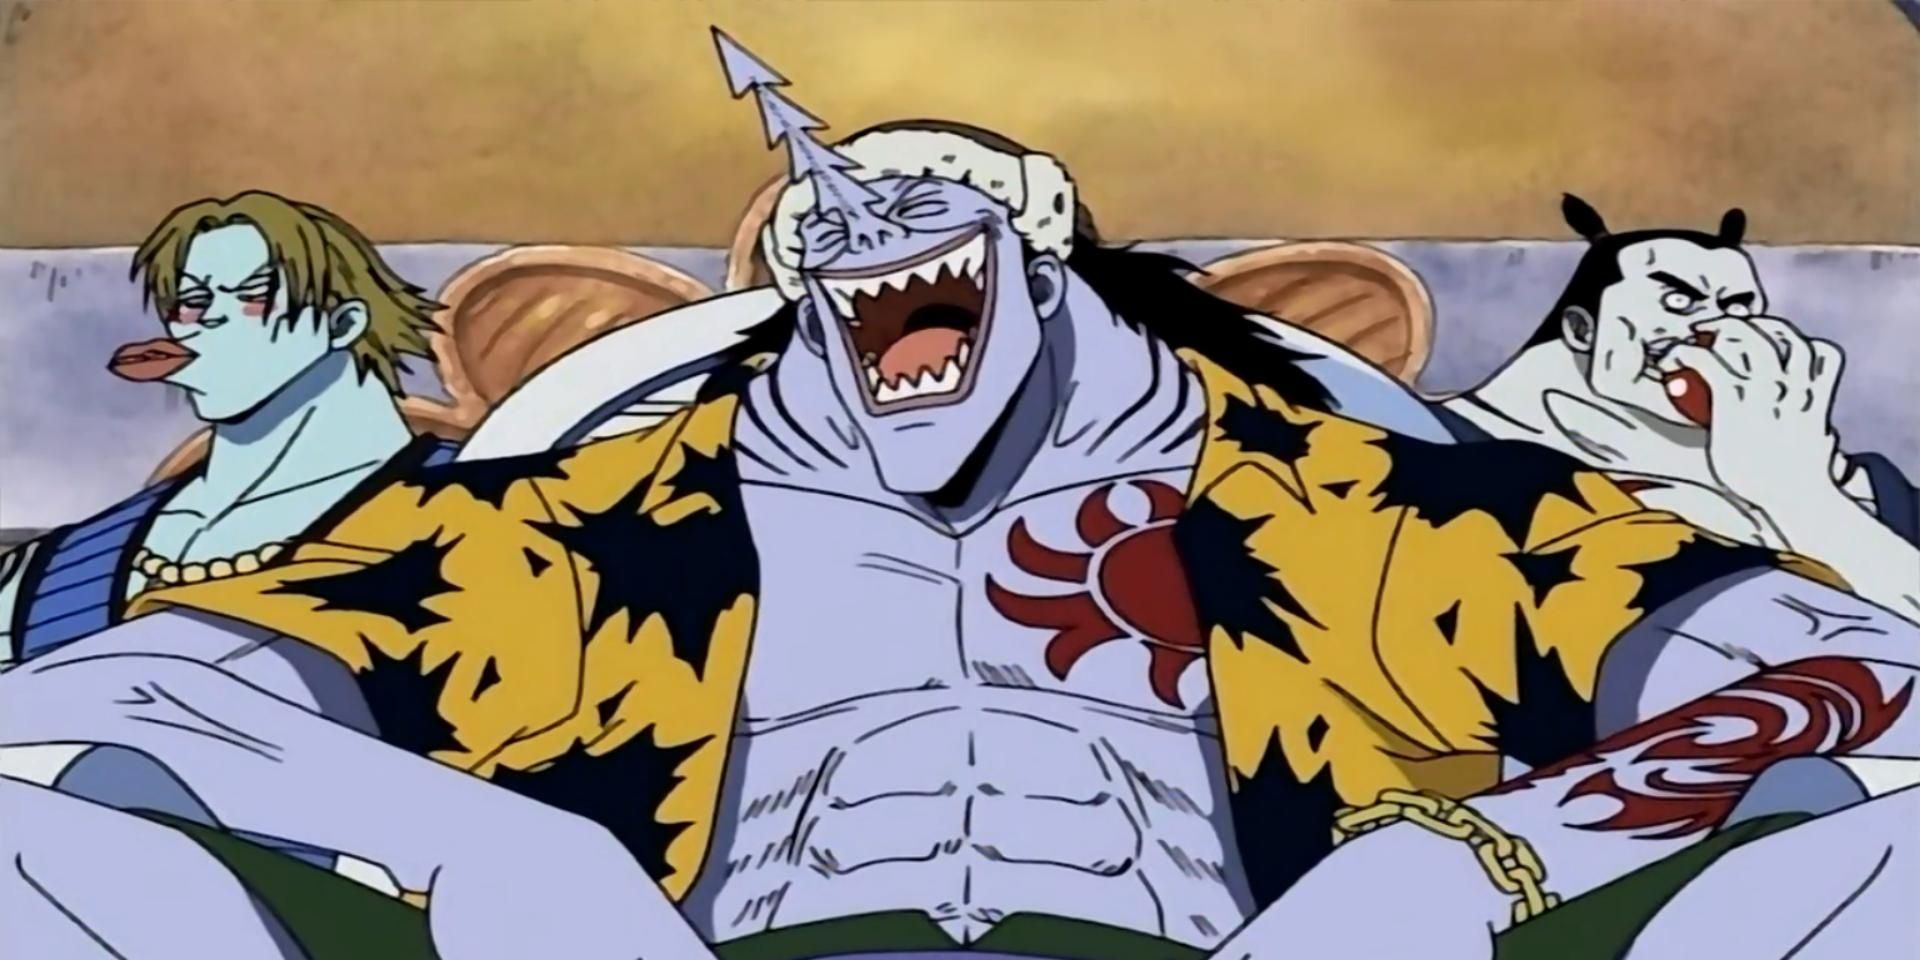 Arlong and his subordinates chuckle during One Piece's Arlong Park arc